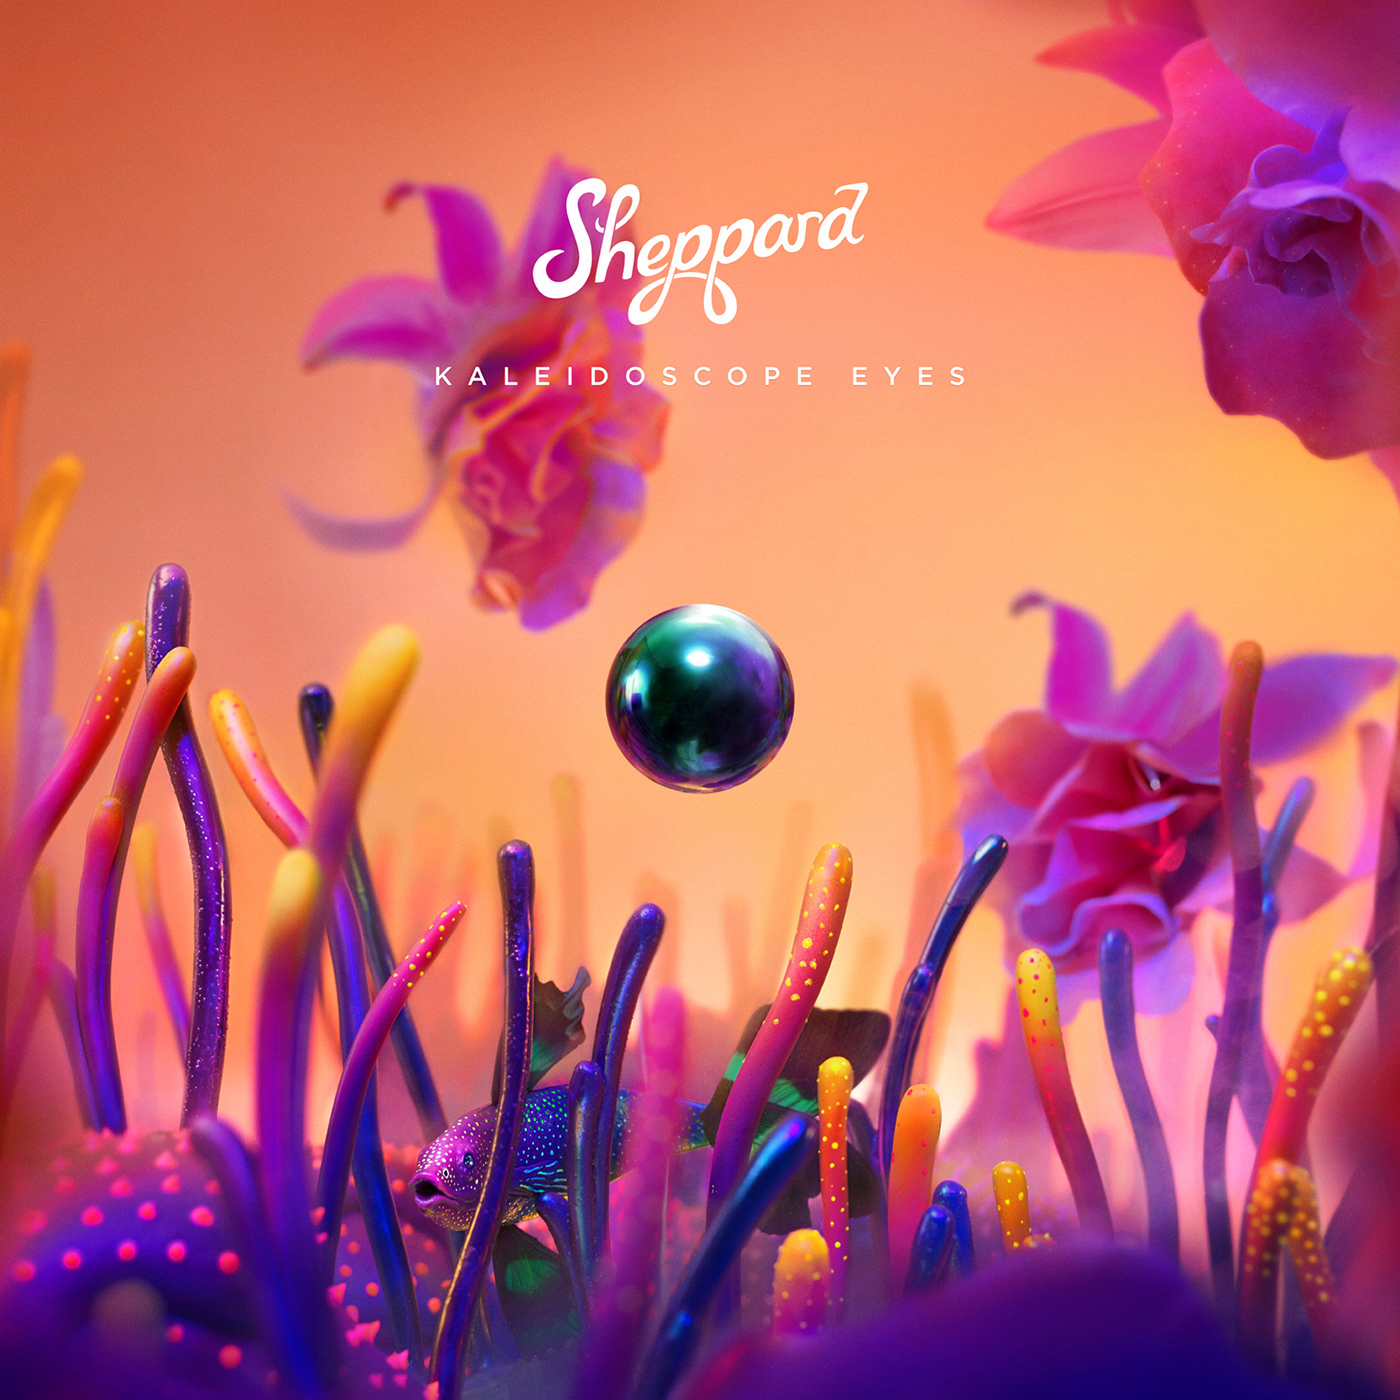 Sheppard's Kaleidoscope Eyes Album Design  Set Design